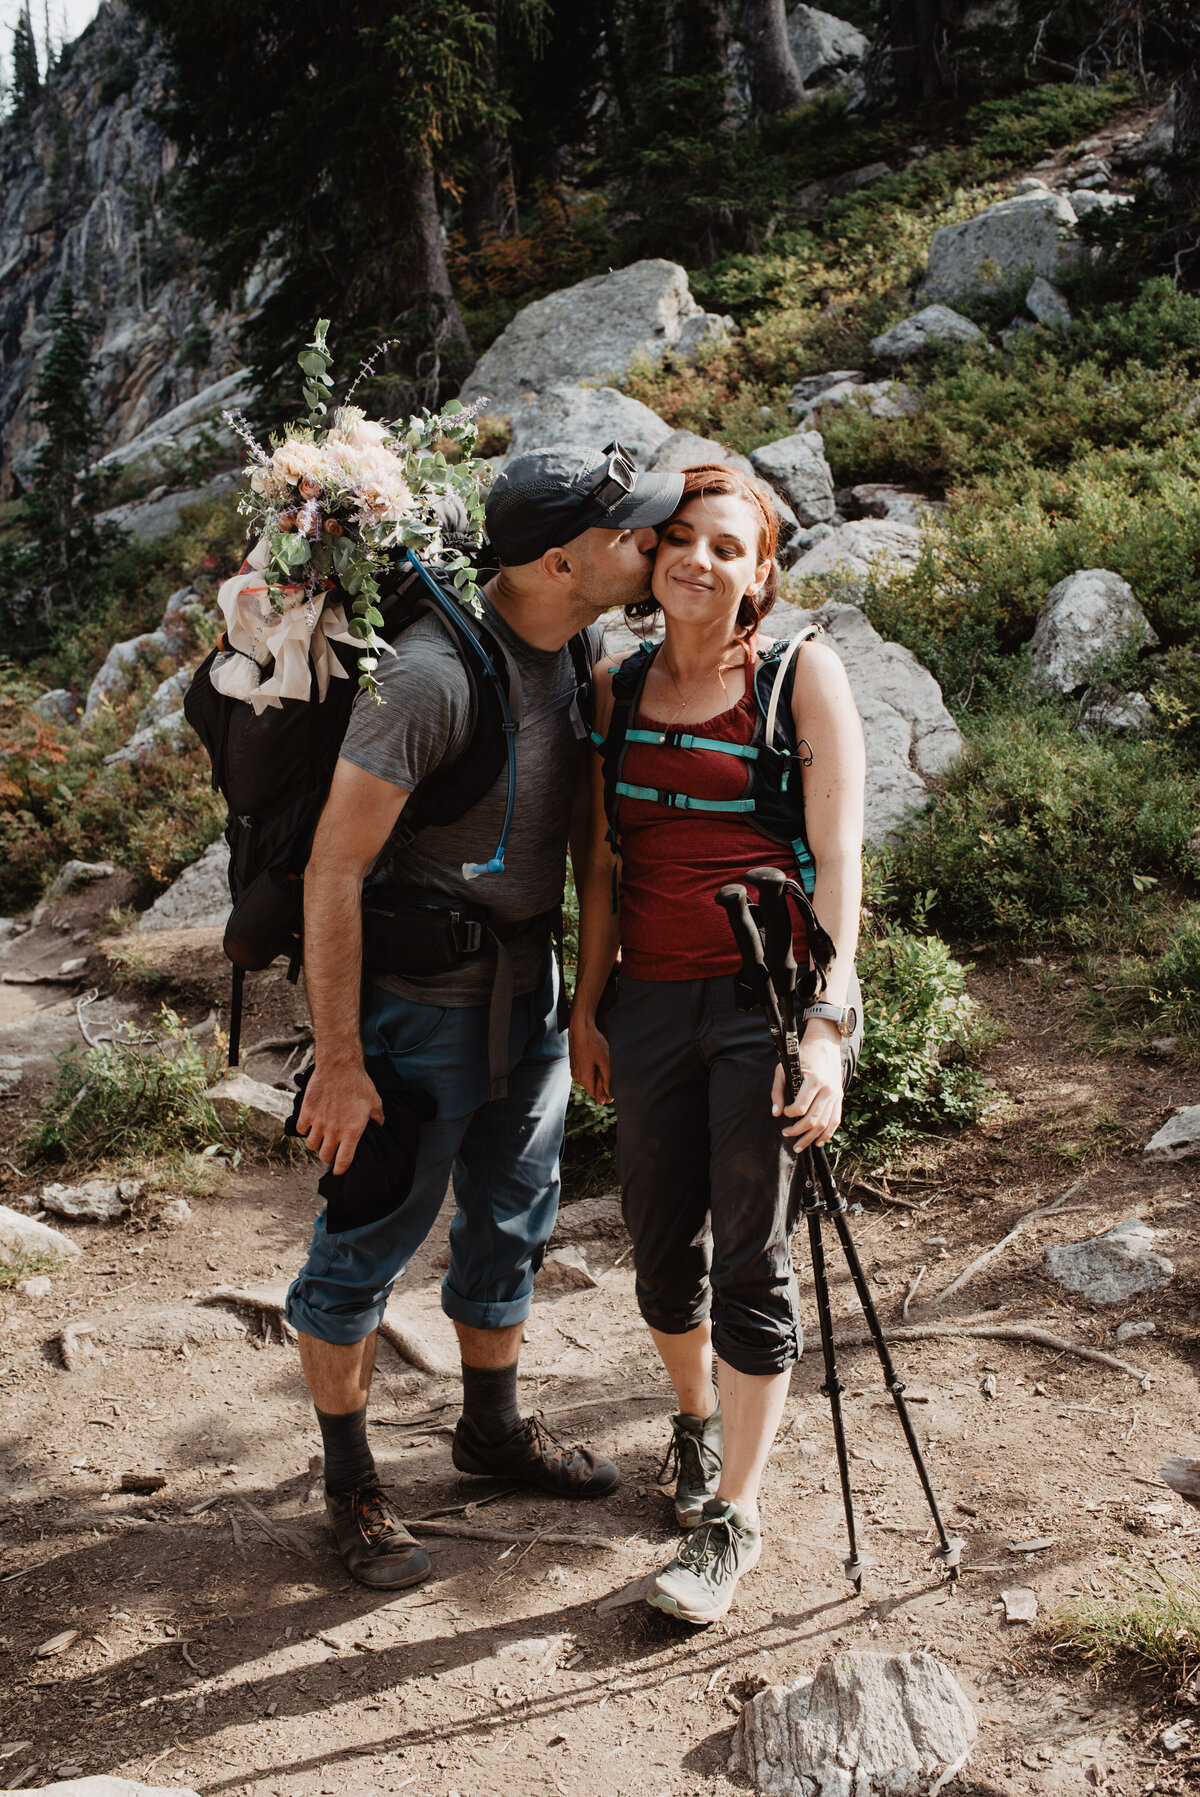 Jackson Hole photographers capture man kissing woman's cheek